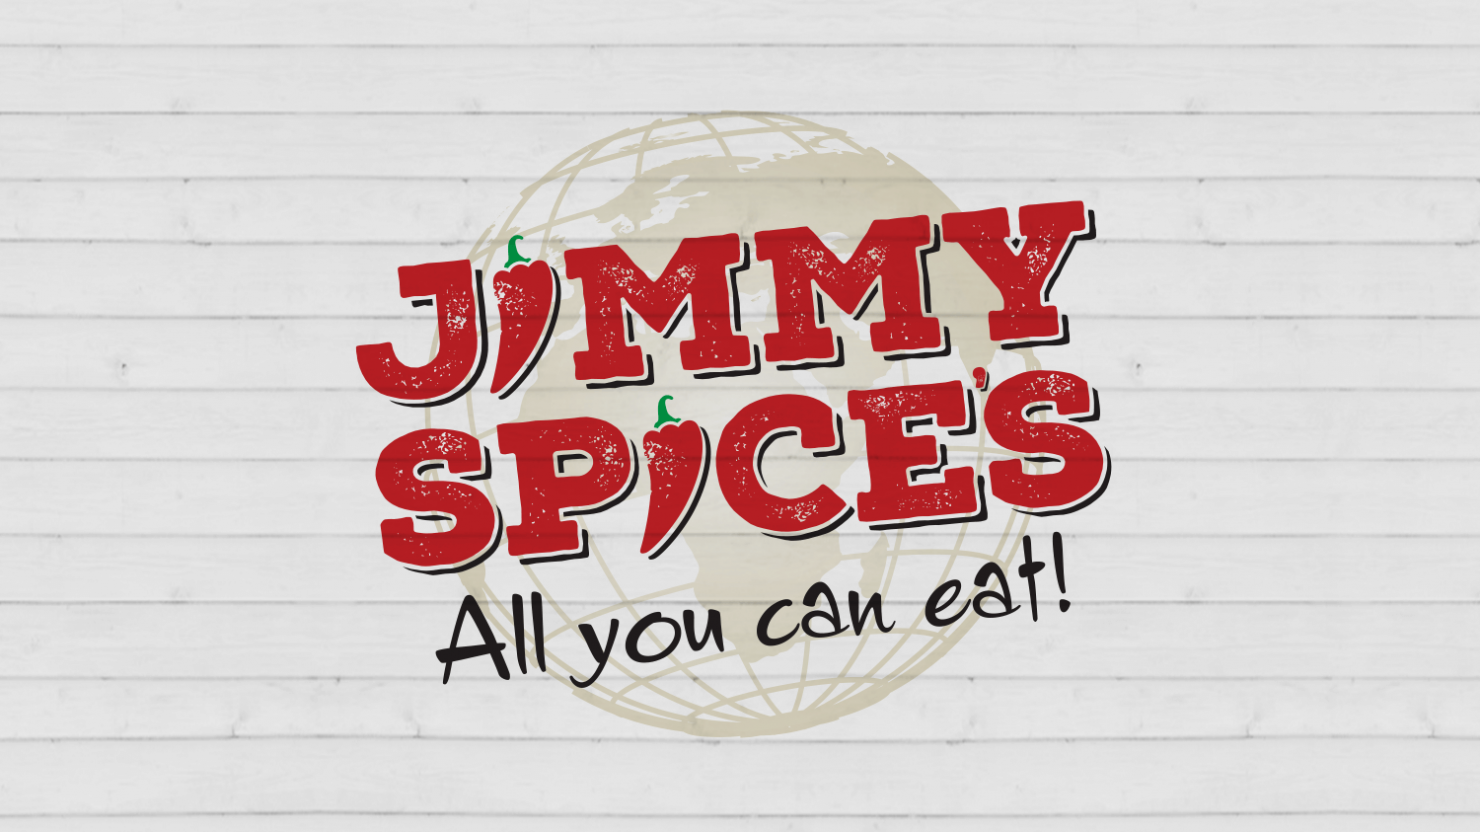 Creative restaurant branding for Birmingham restaurant Jimmy Spices